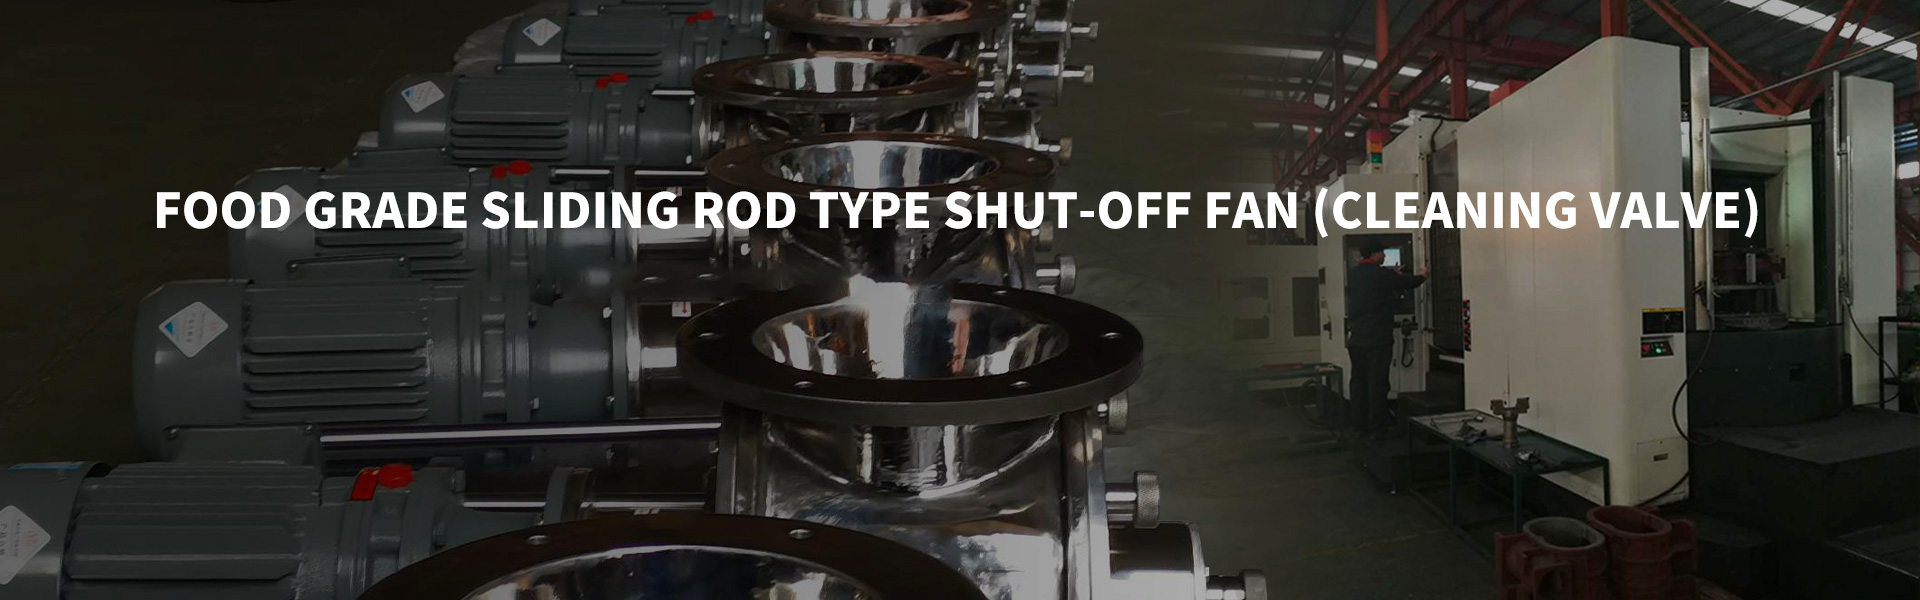 Food grade sliding rod type shut-off fan (cleaning valve)